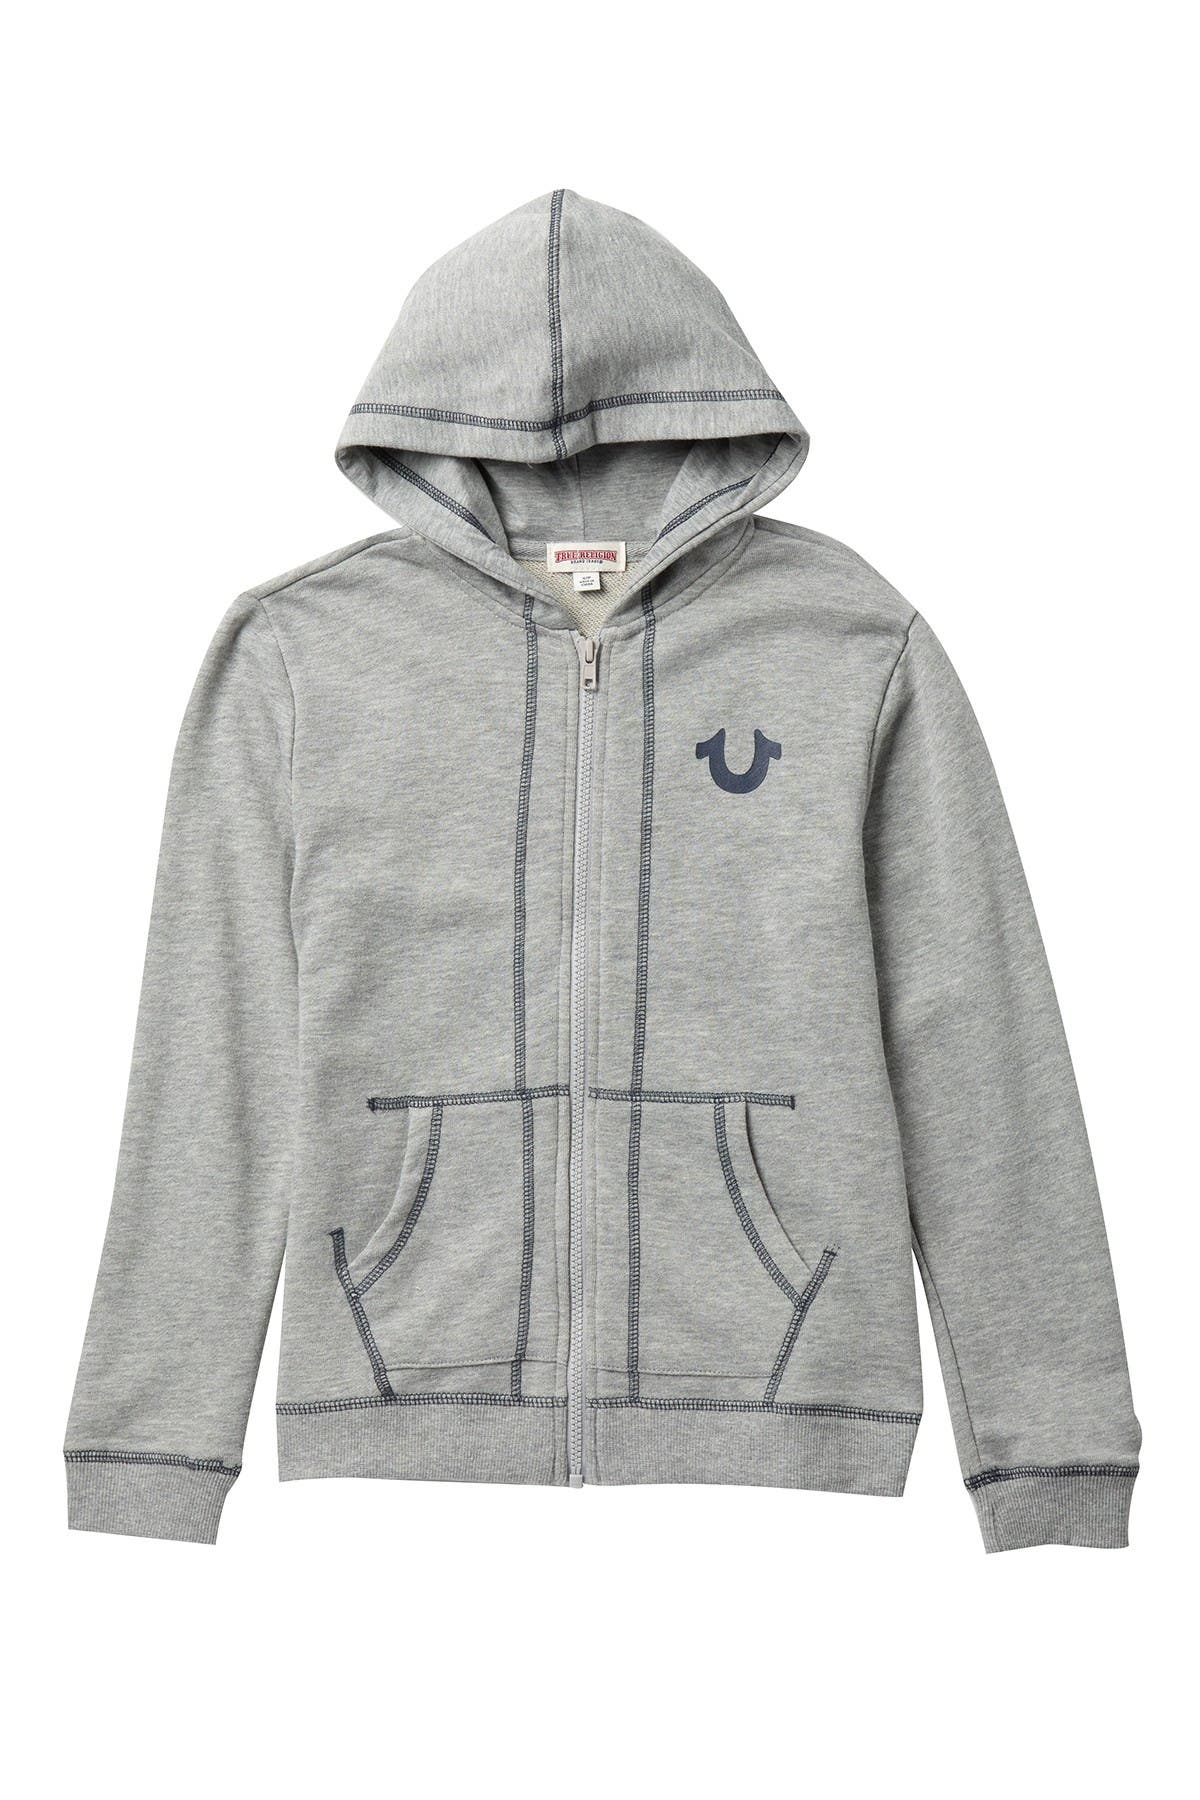 true religion raglan hoodie